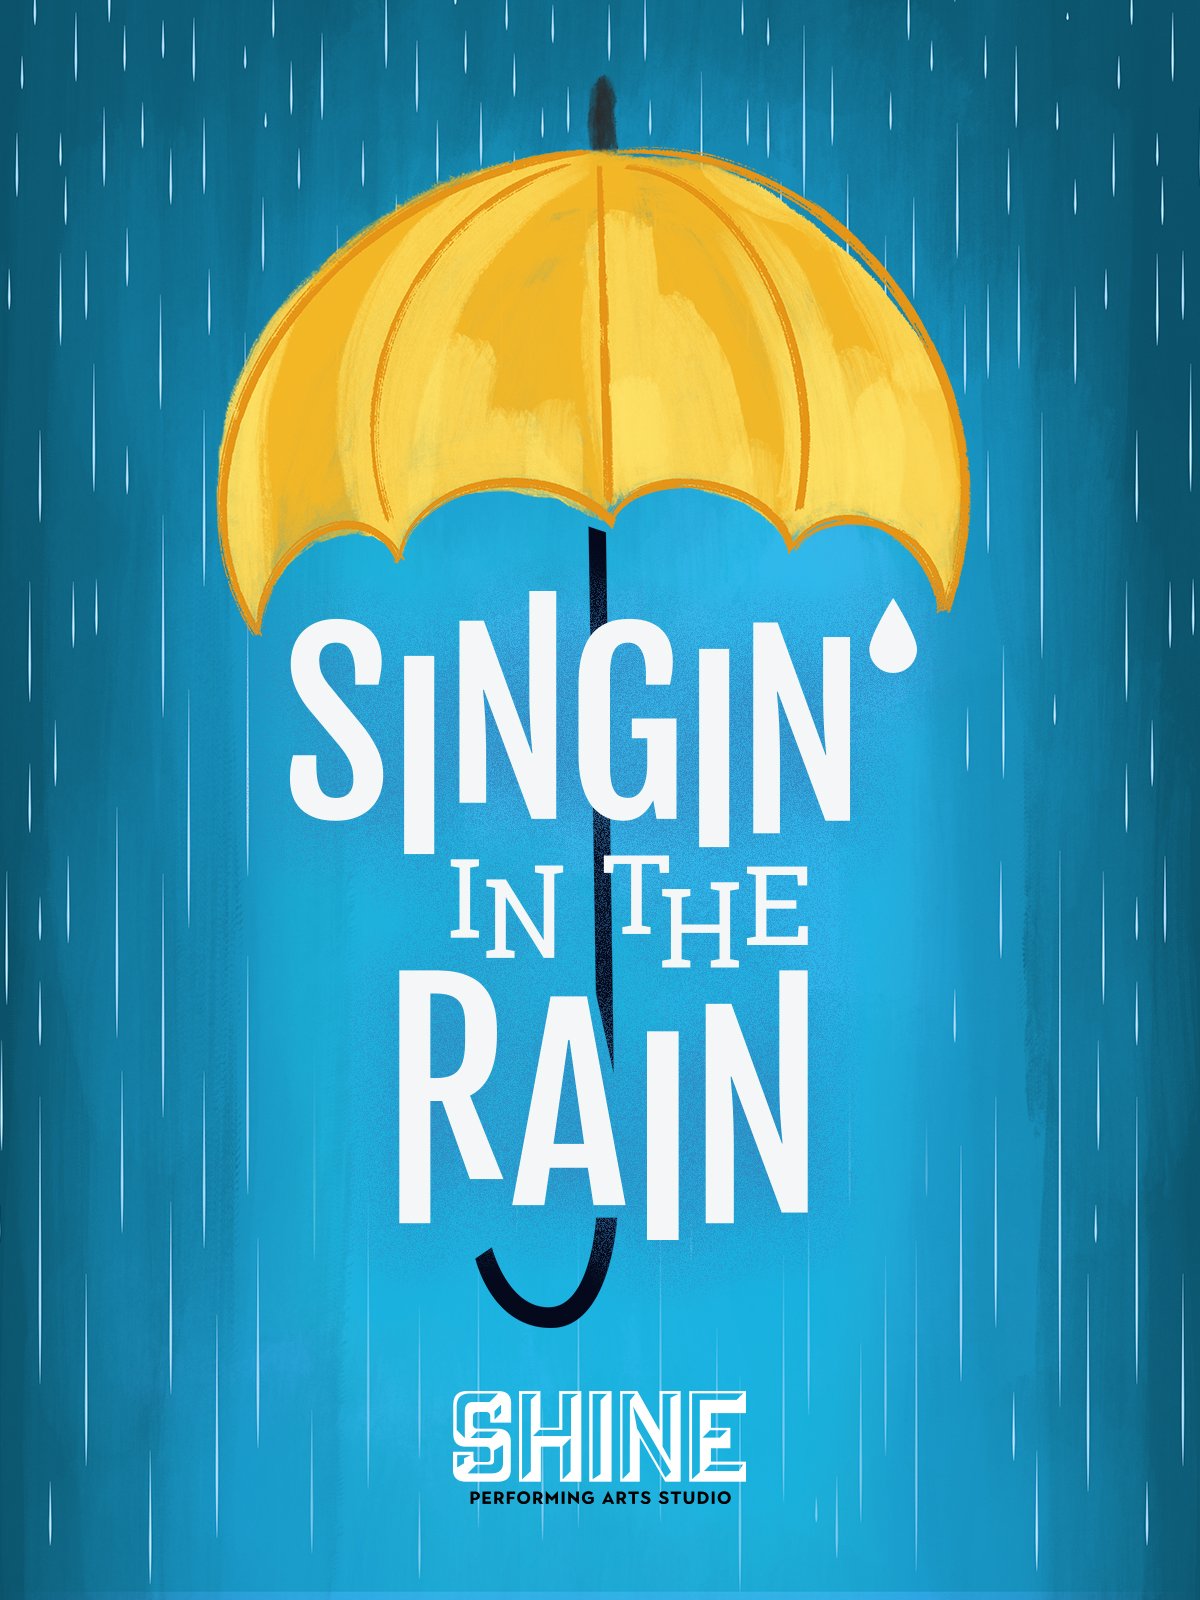 Shine_Singin-in-the-Rain_Poster-Web